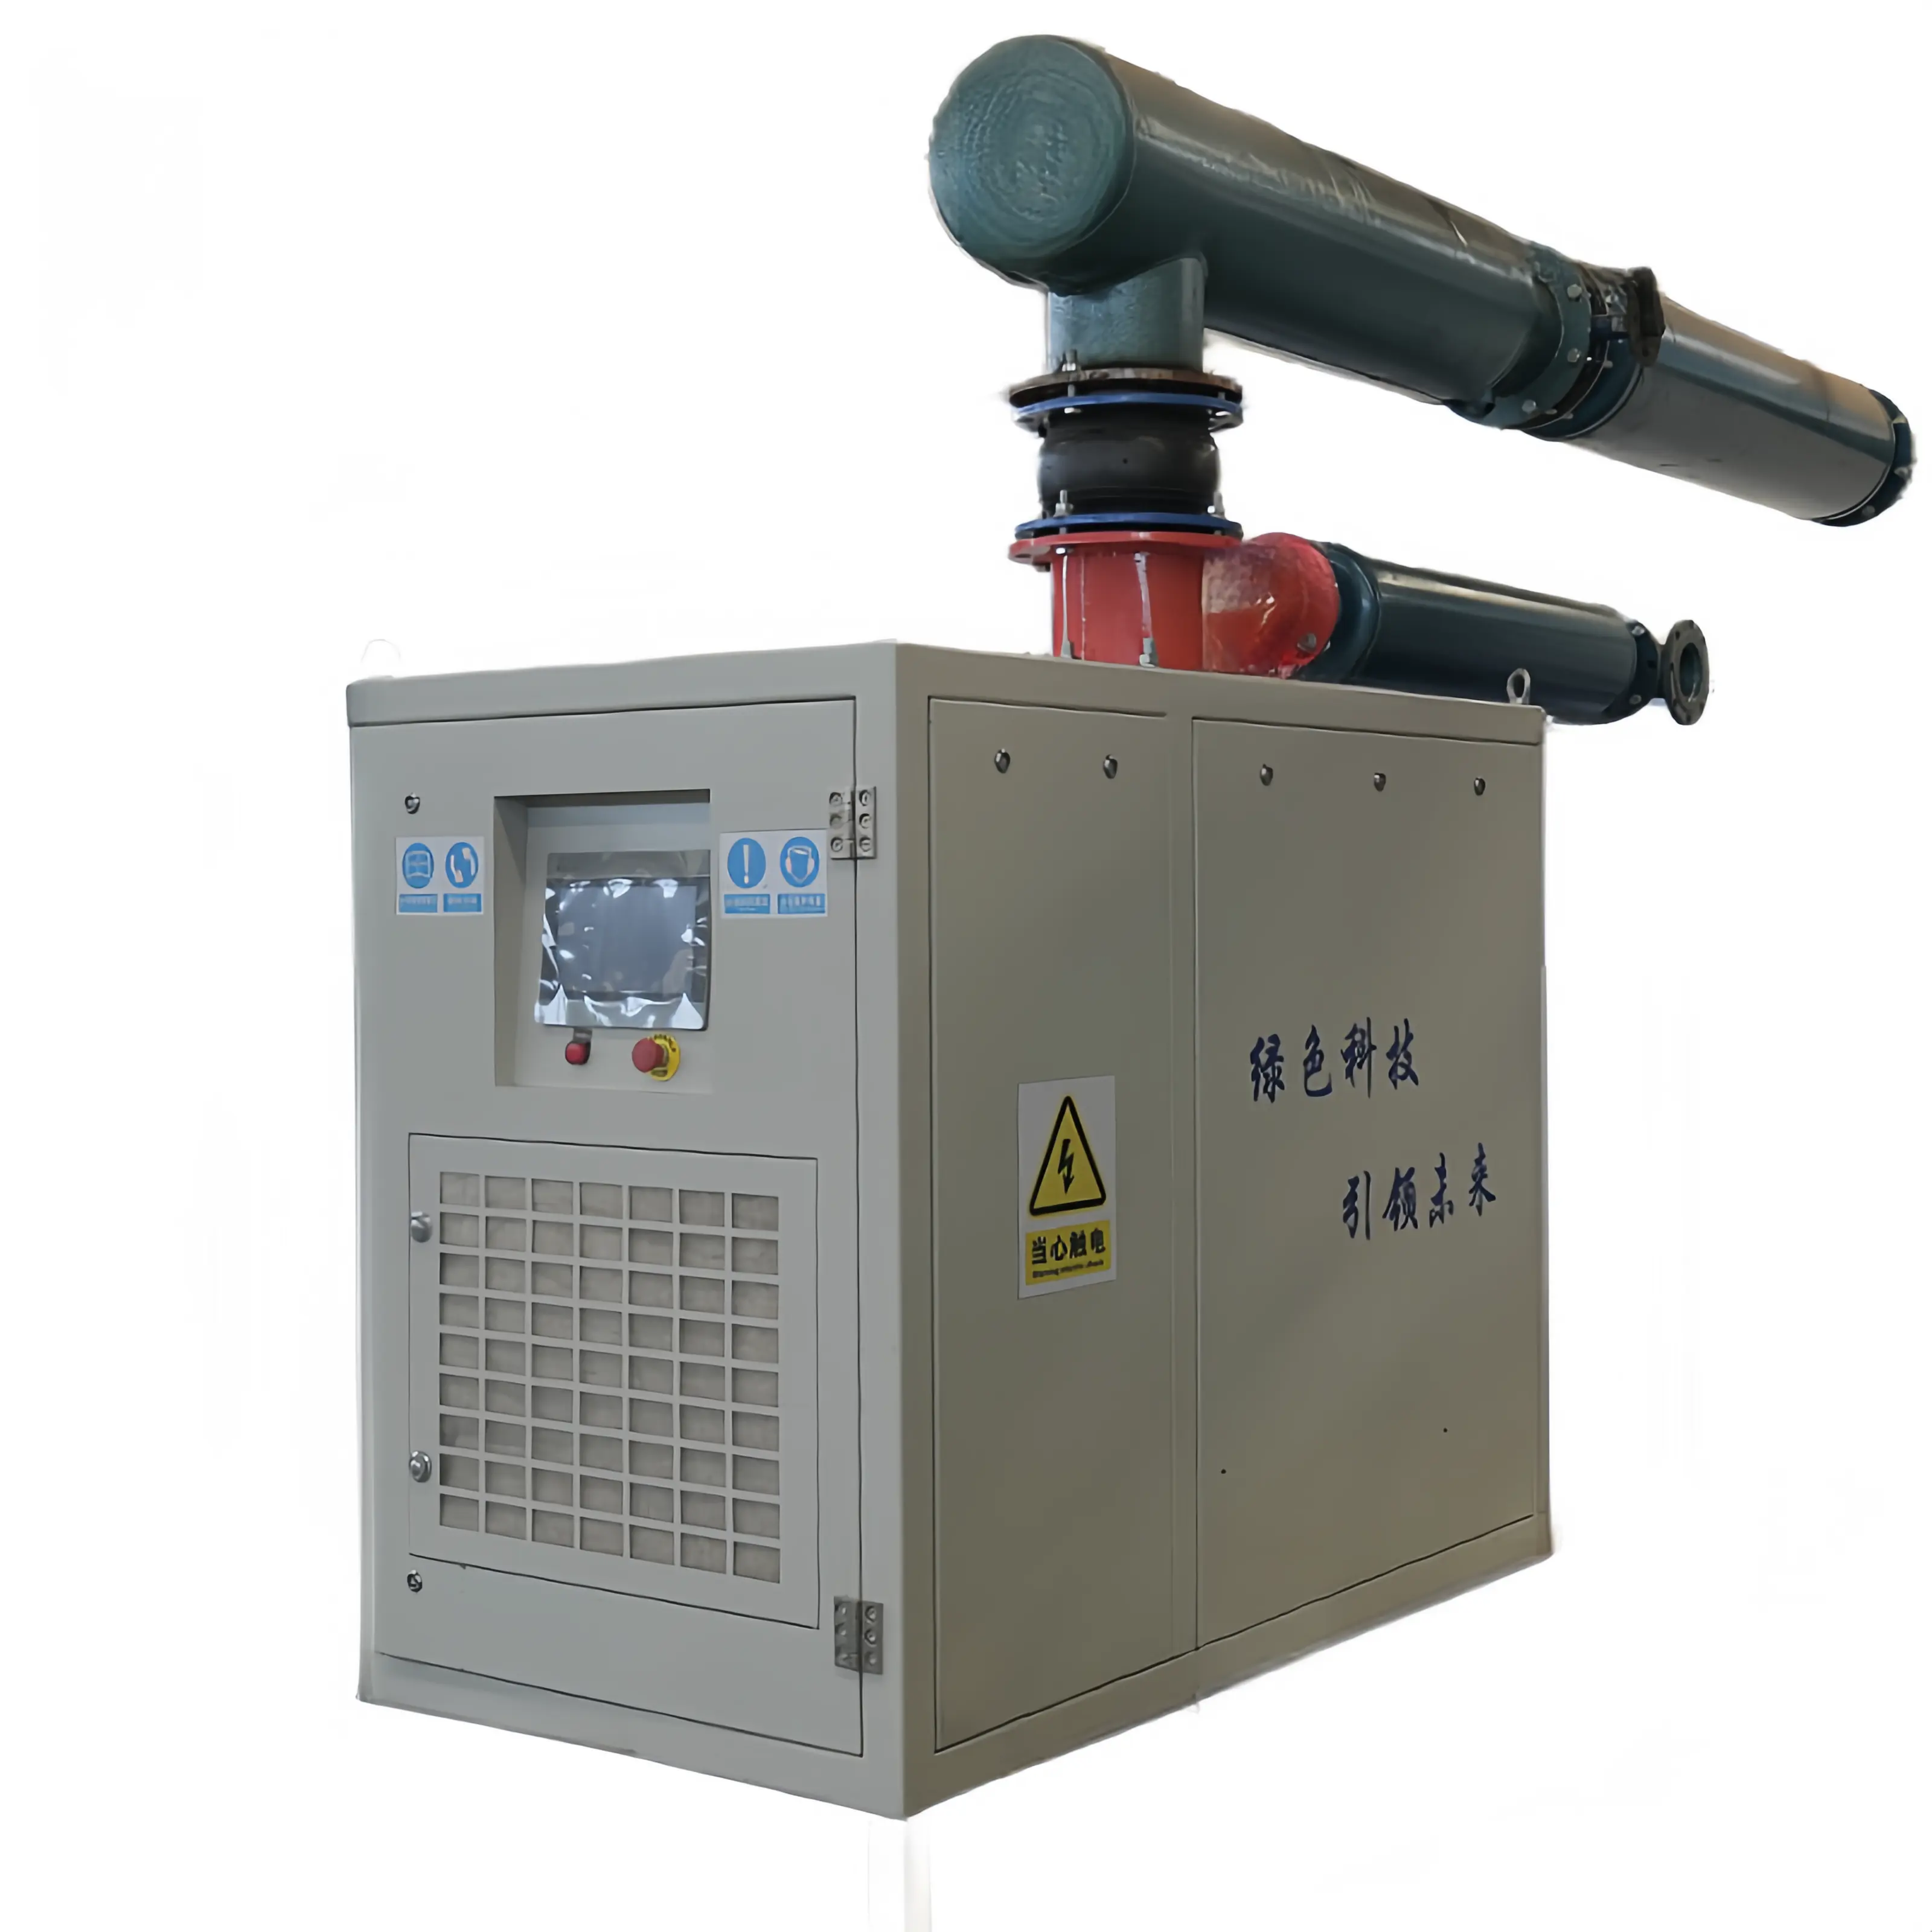 Máquina de sopro JYC Ventilador elétrico de raízes Greatech, bomba de vácuo para fornecimento de oxigênio industrial e de transporte